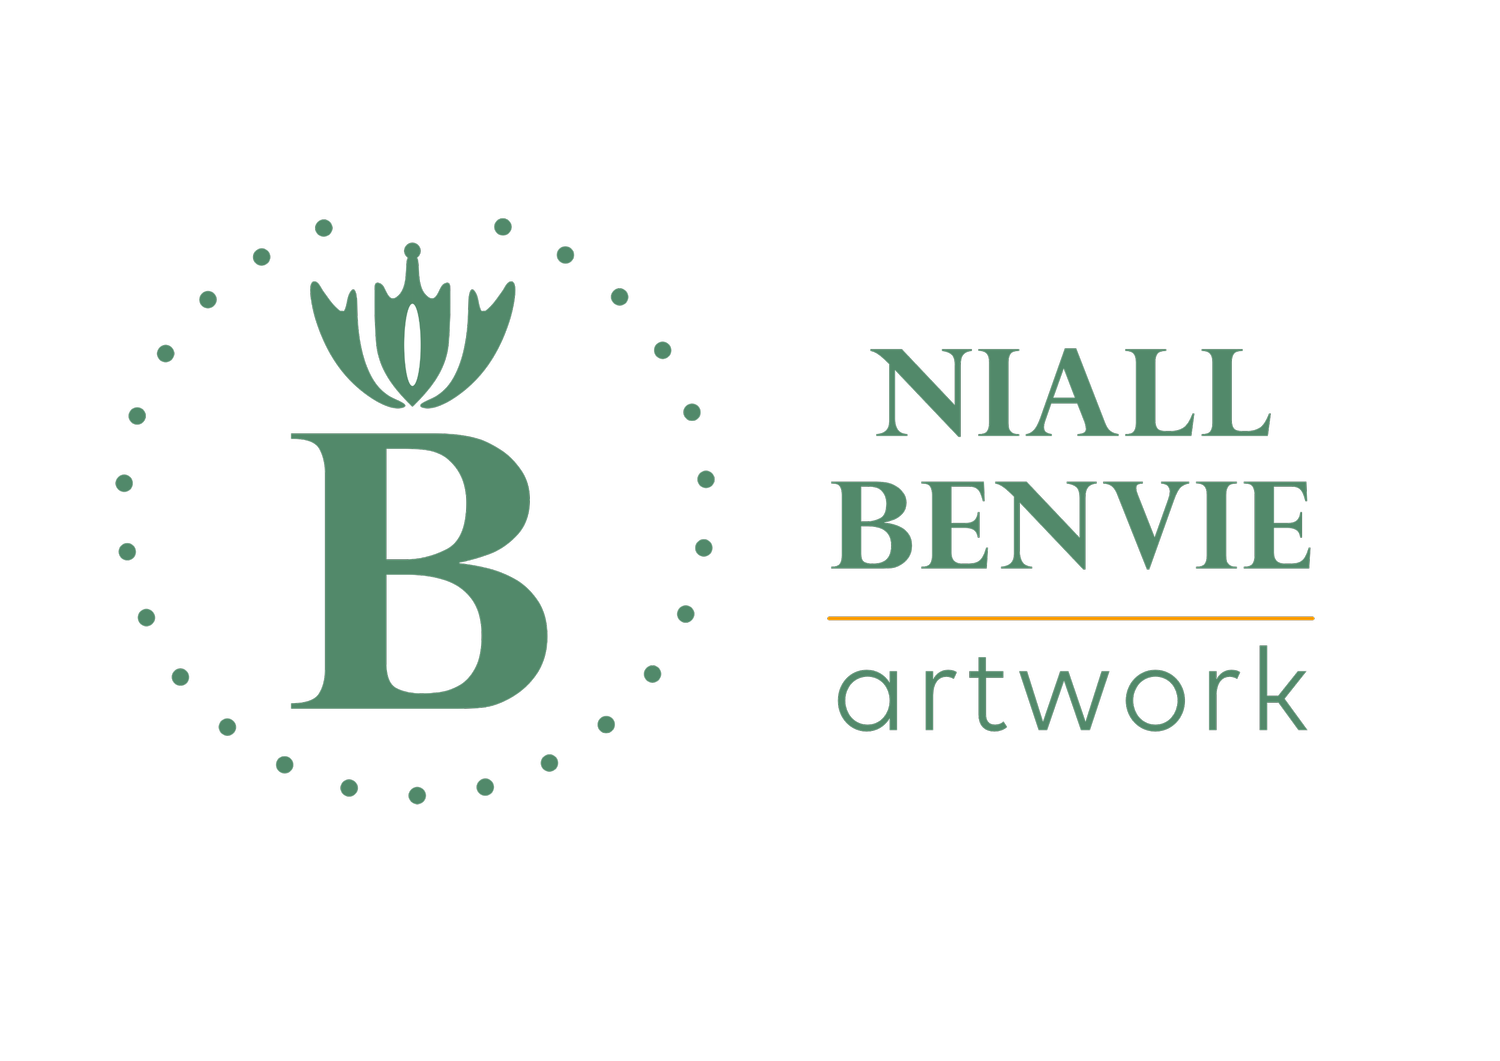 Niall Benvie artwork